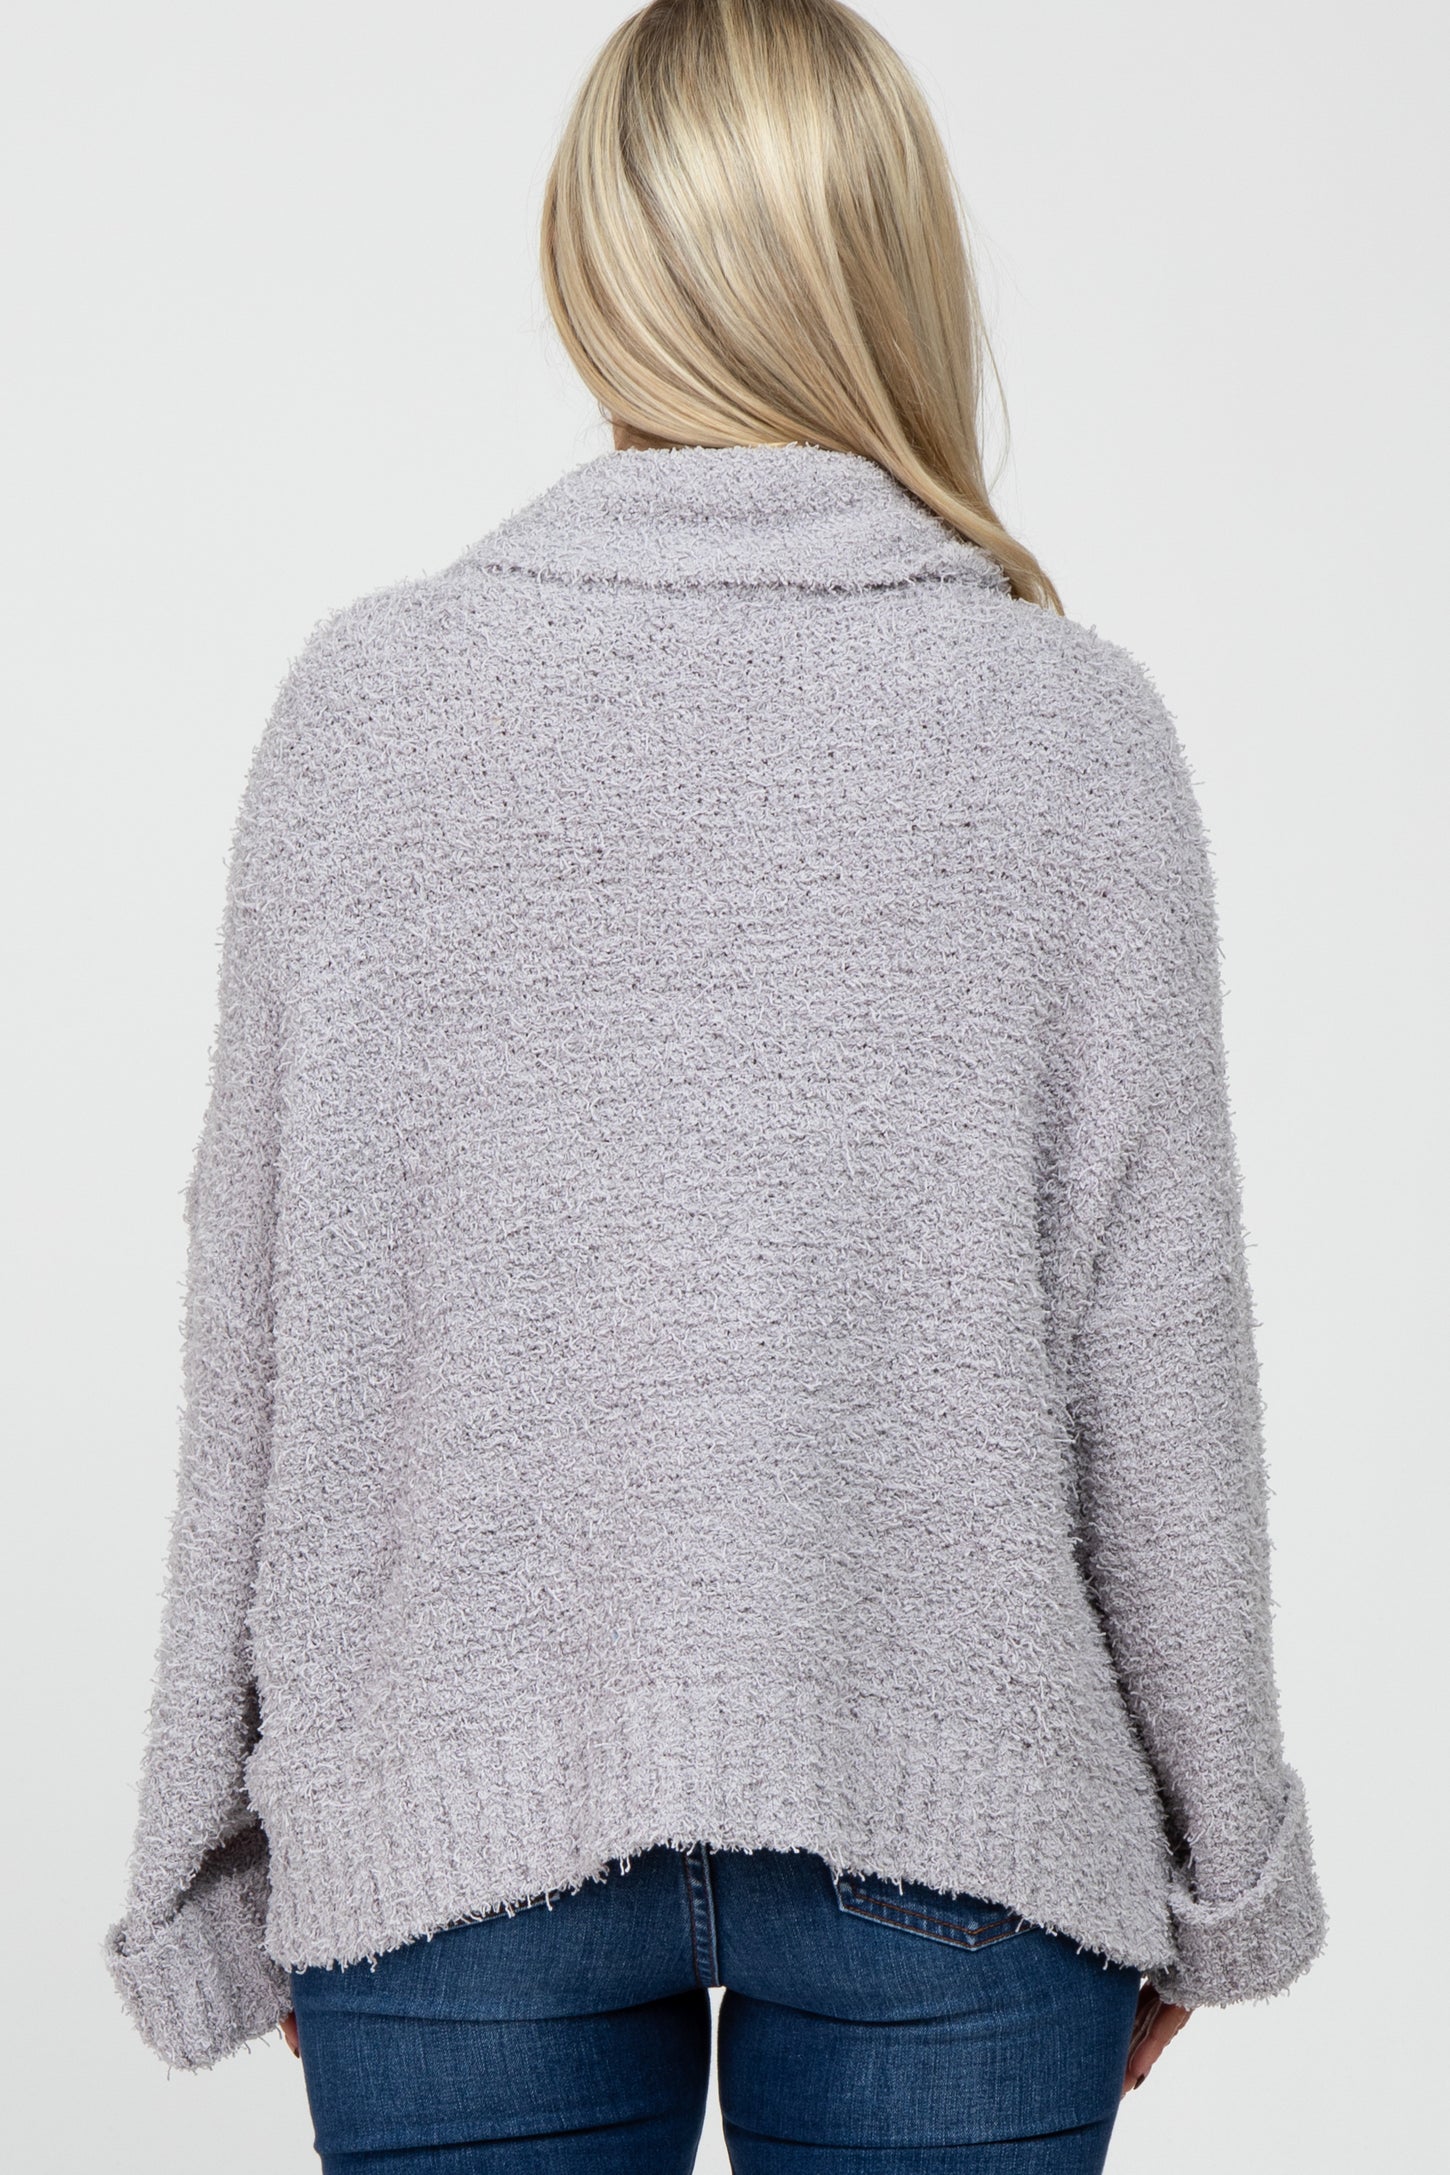 Grey Cowl Neck Cuff Sleeve Soft Knit Maternity Sweater– PinkBlush